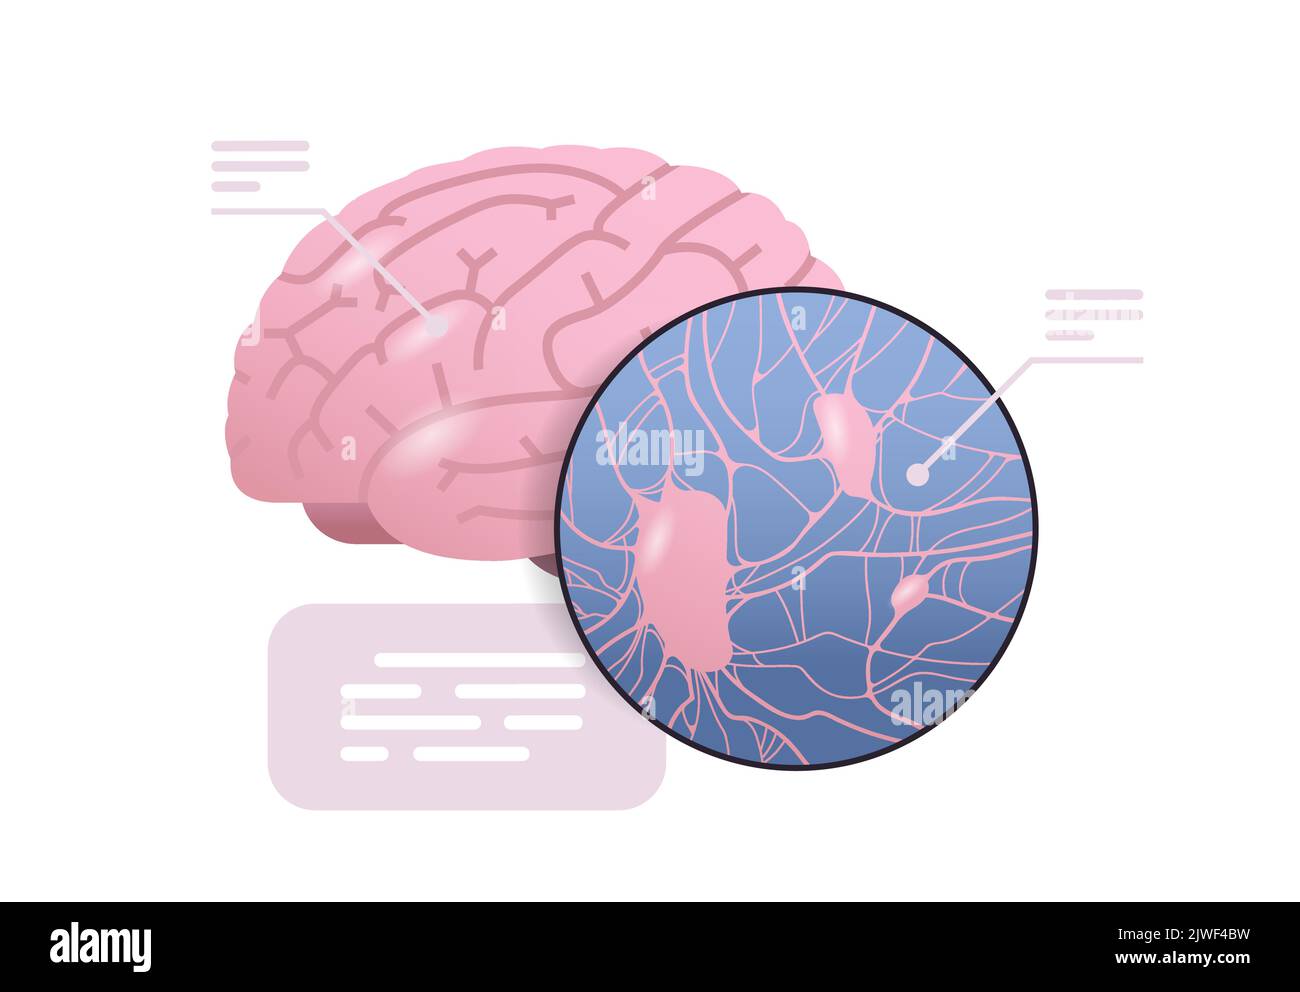 detailed explanation anatomical brain structure human body internal organ anatomy medicine healthcare concept Stock Vector